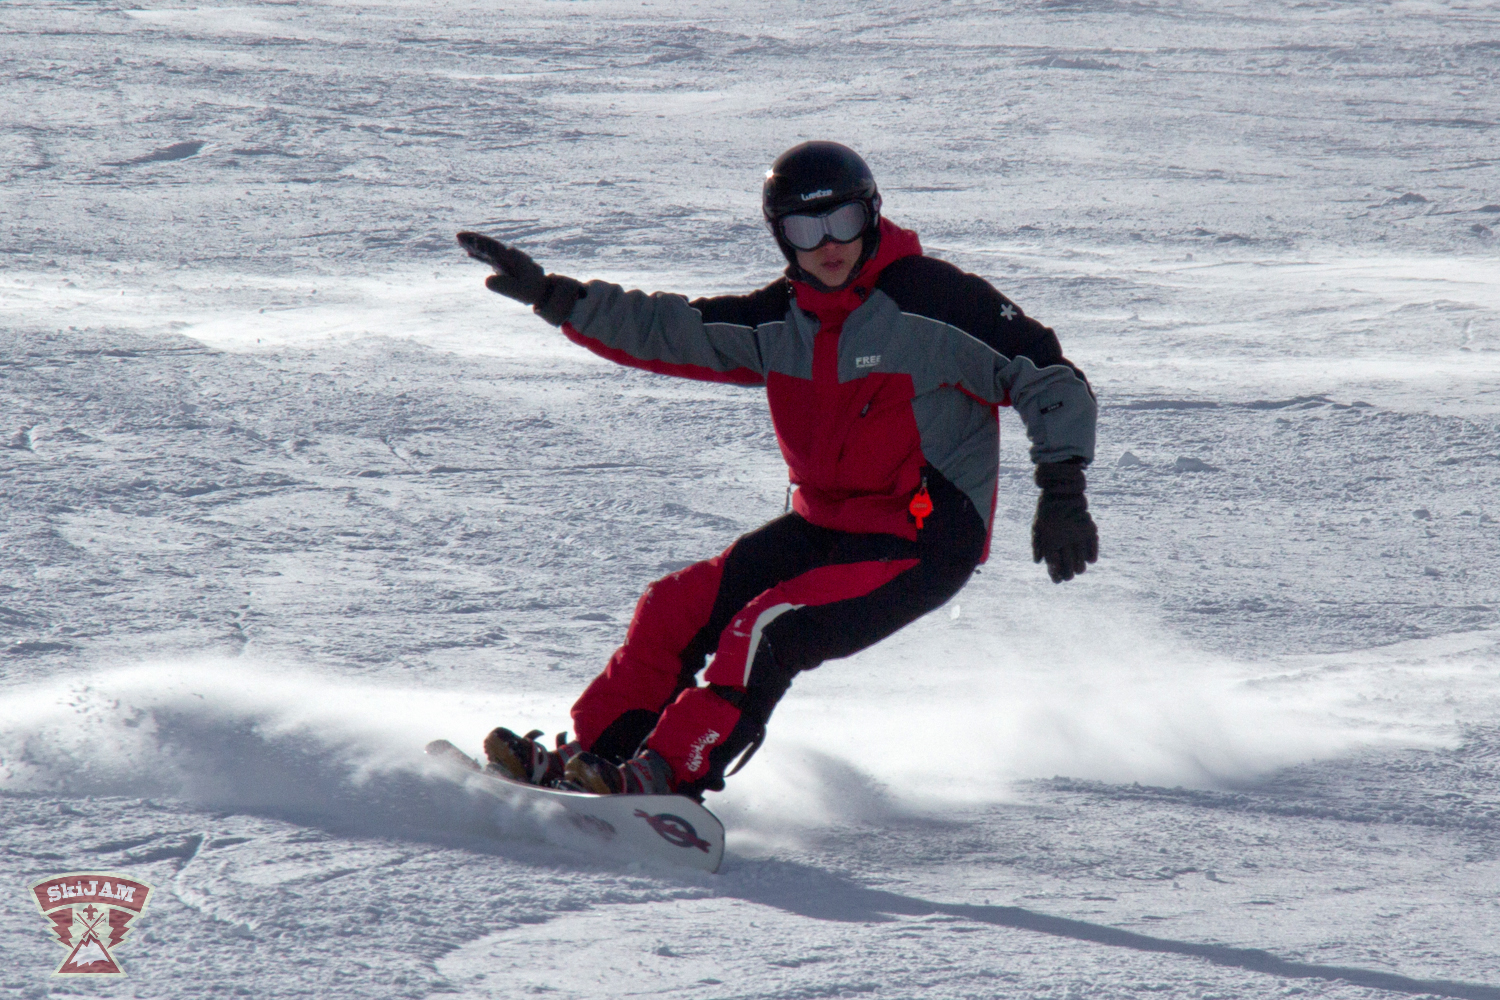 2013-skijam-havasi-mate-008.jpg